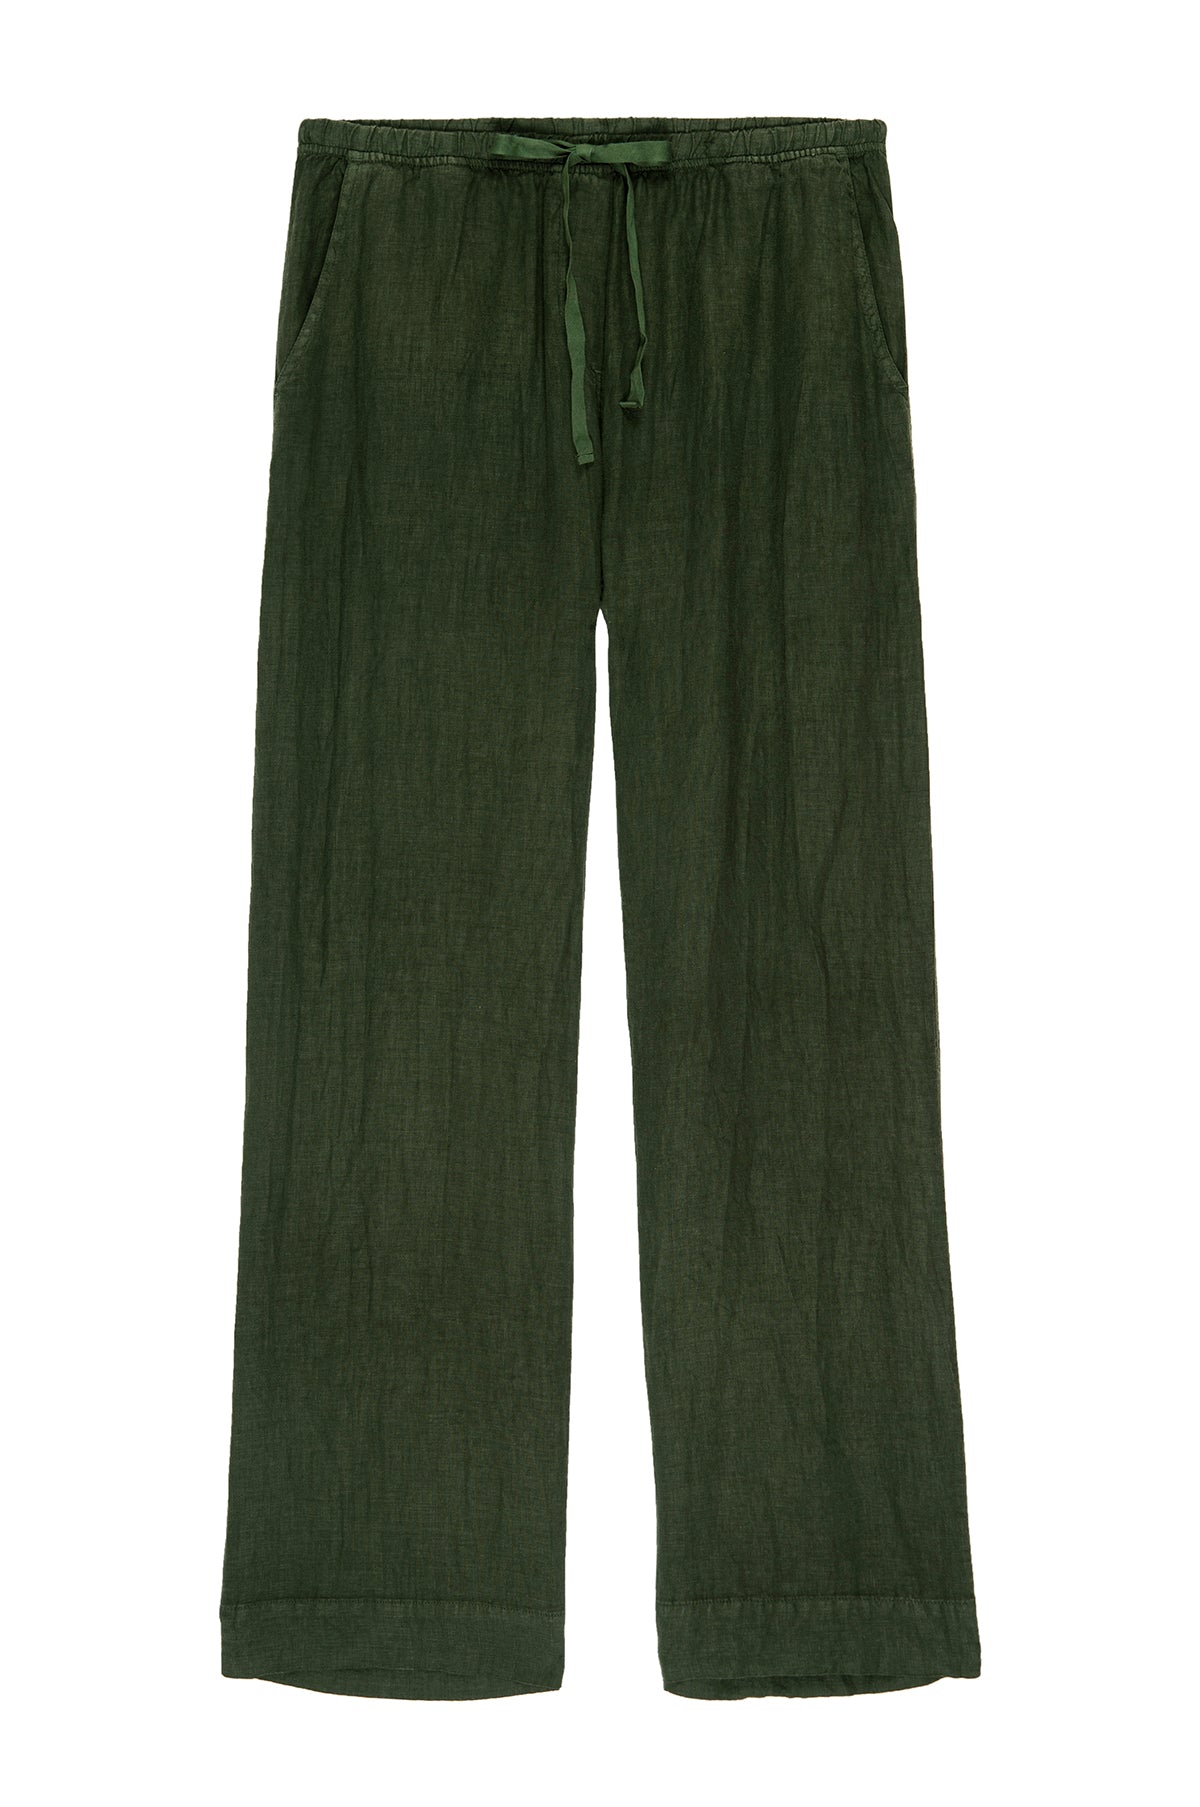 A women's green linen PICO PANT by Velvet by Jenny Graham.-24427665064129